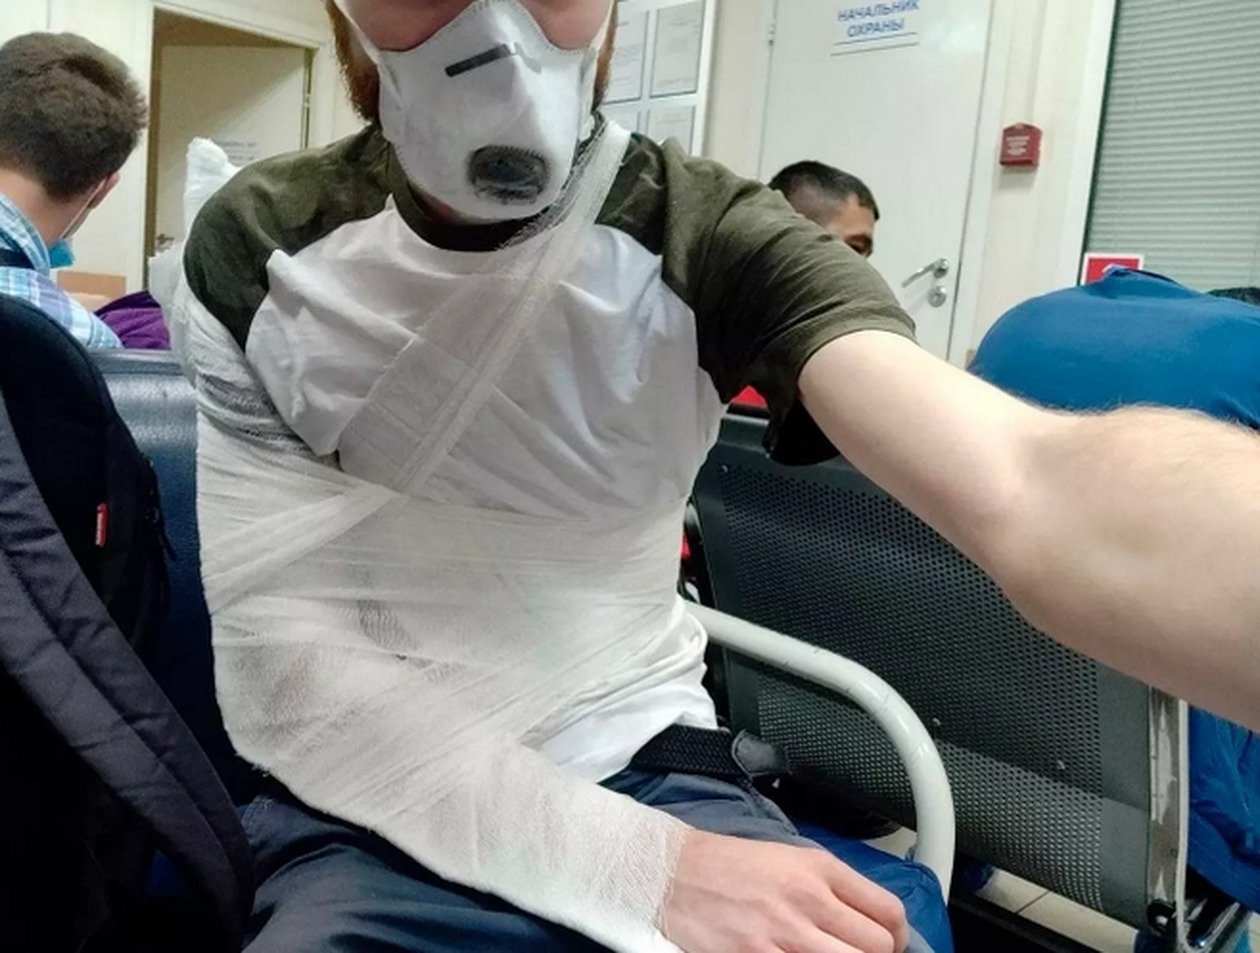 Журналисту сломали руку на избирательном участке в Петербурге